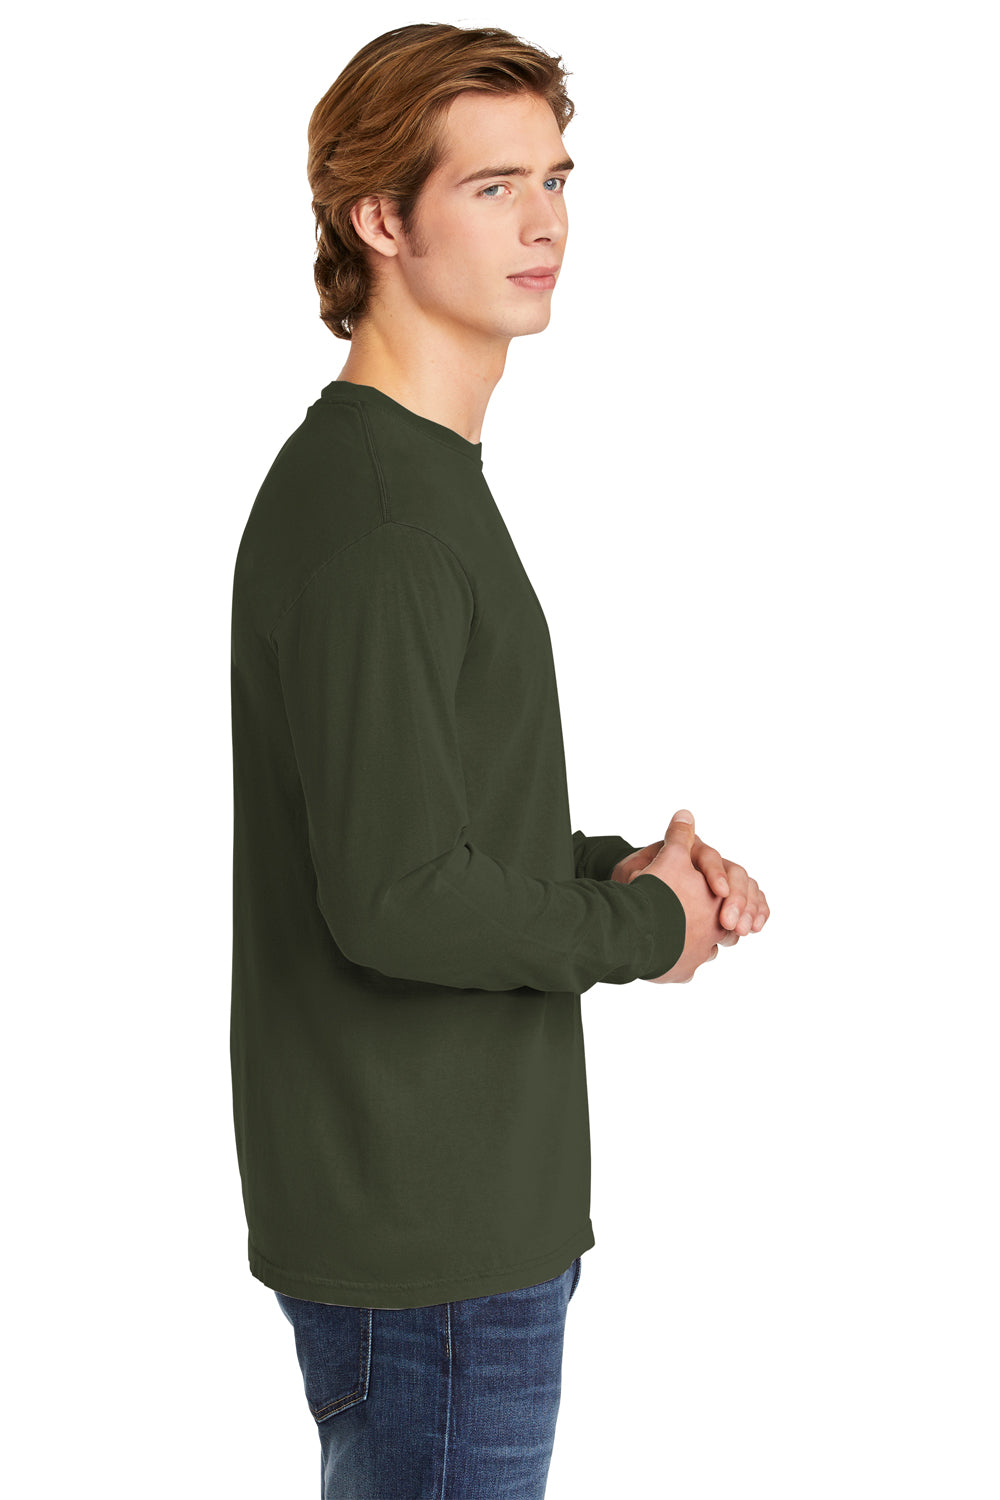 Comfort Colors 6014/C6014 Mens Long Sleeve Crewneck T-Shirt Hemp Green Side